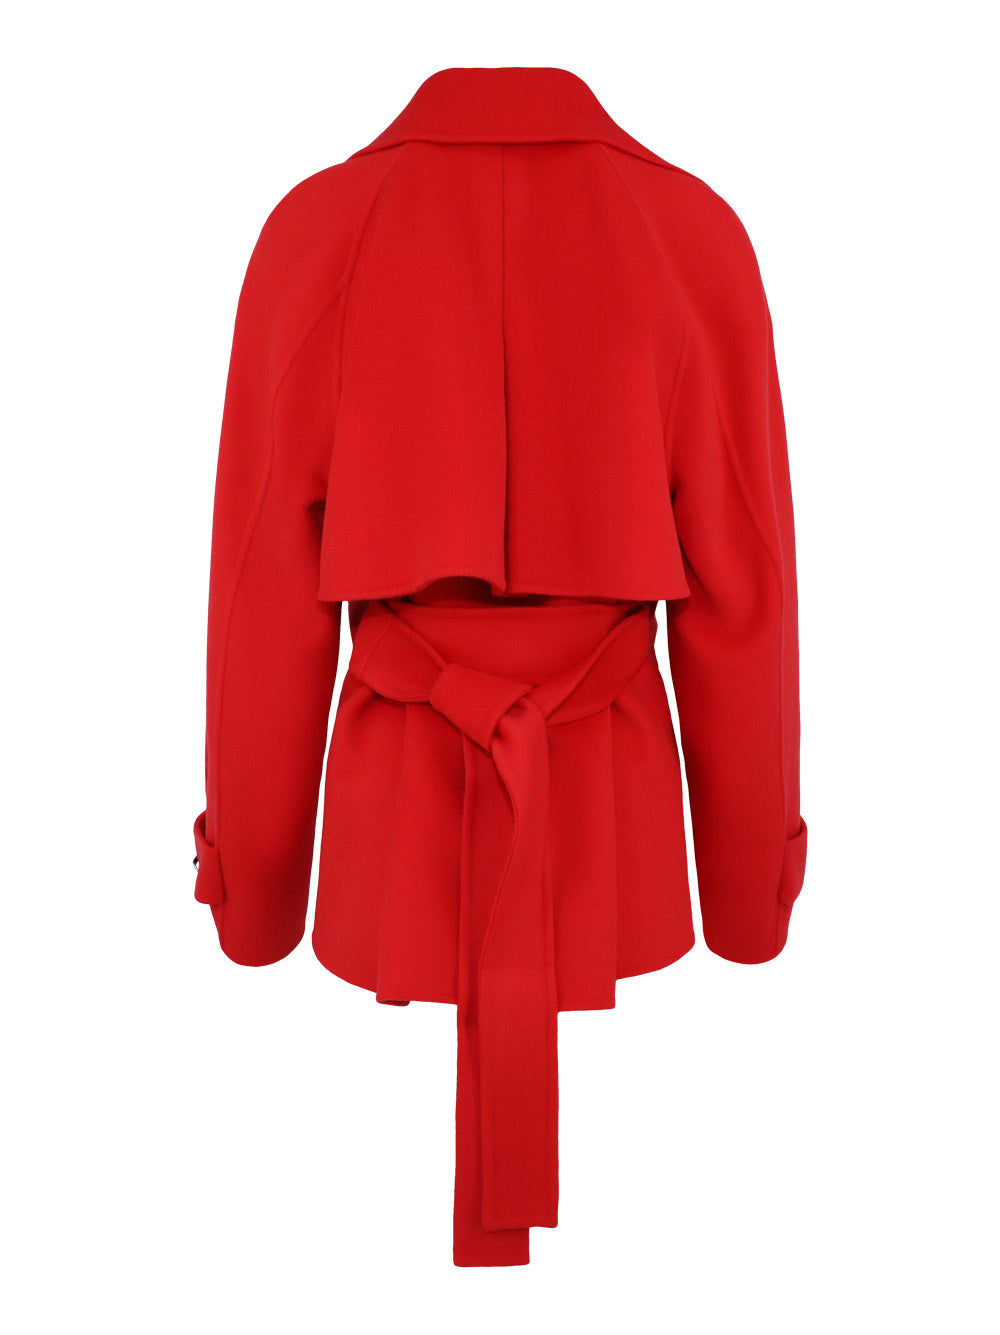 Marella Dentice Wool Jacket in Red